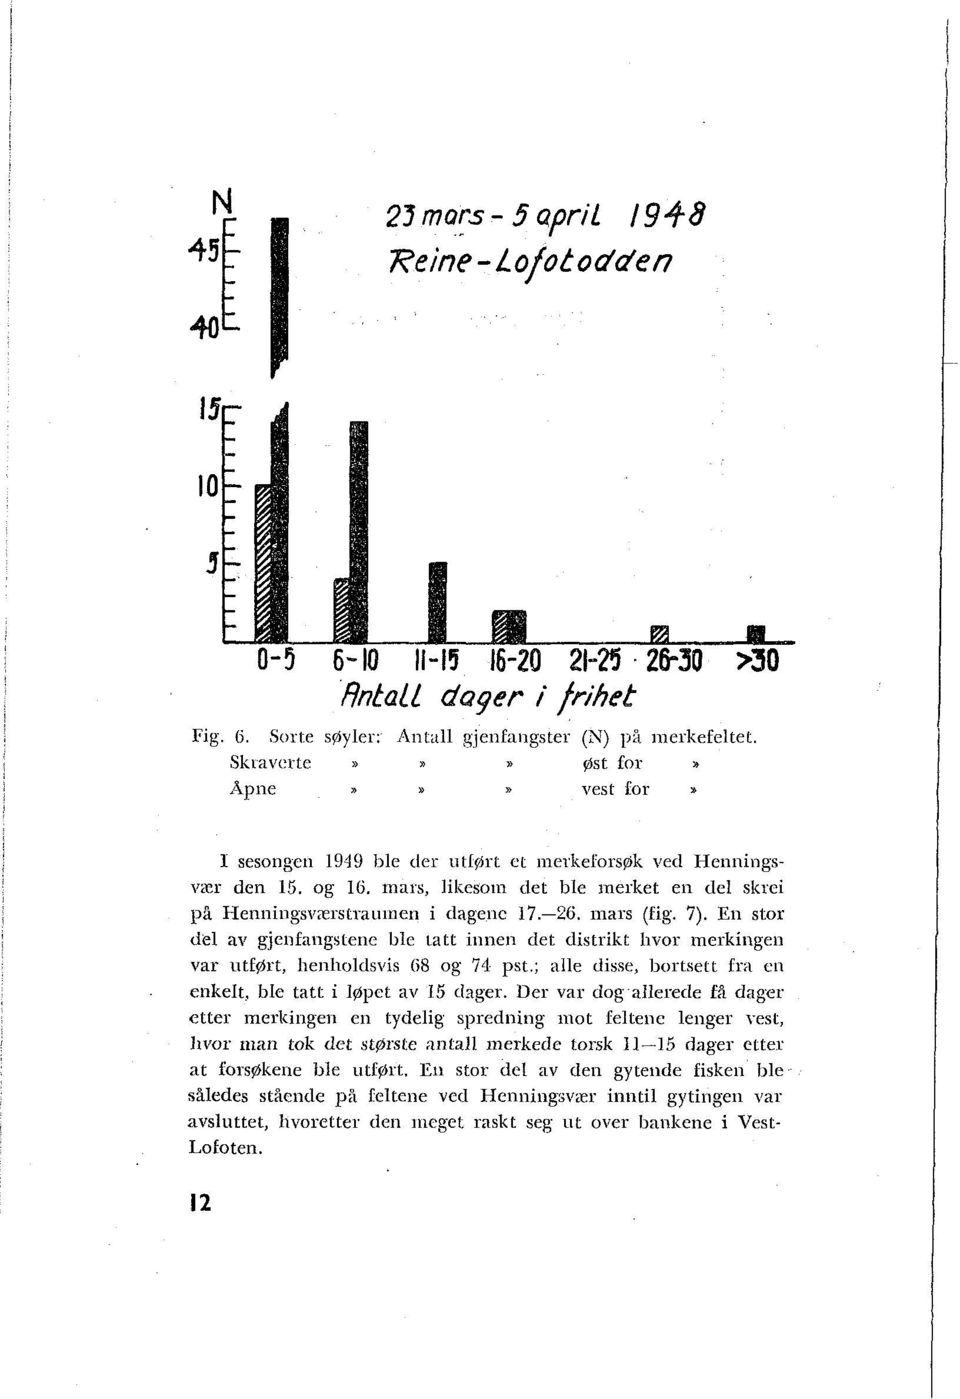 mars, lilicsotil det ble inerket en del skrci p5 Heililiiigsværsirauinen i dageiic 17.-26. iiiars (fig. 'i).